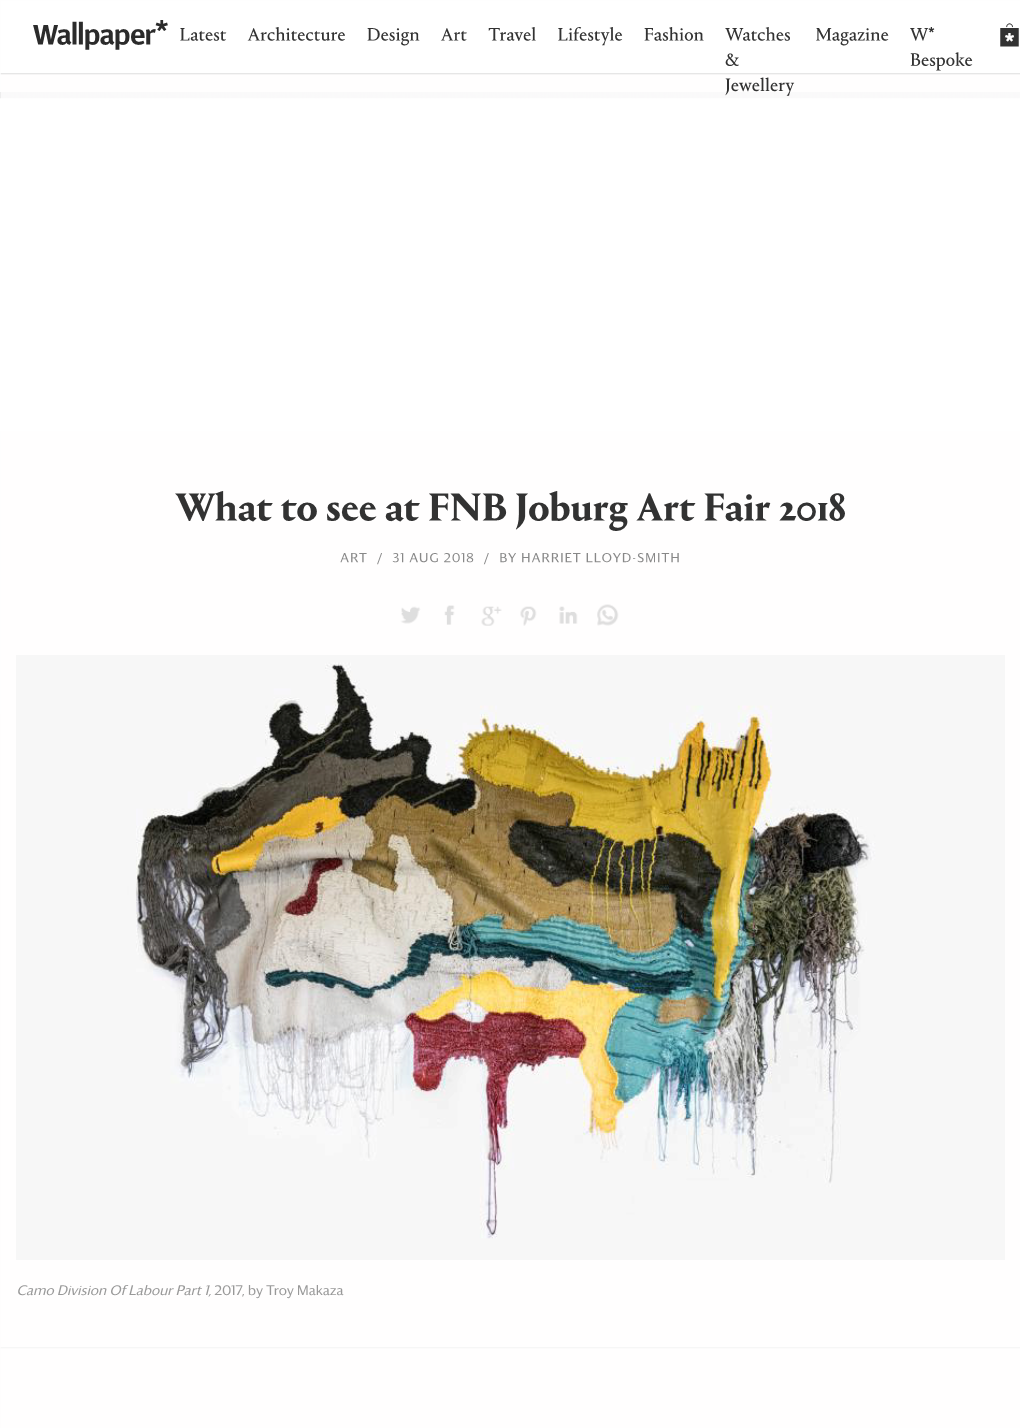 What to See at FNB Joburg Art Fair 2018 Wallpaper